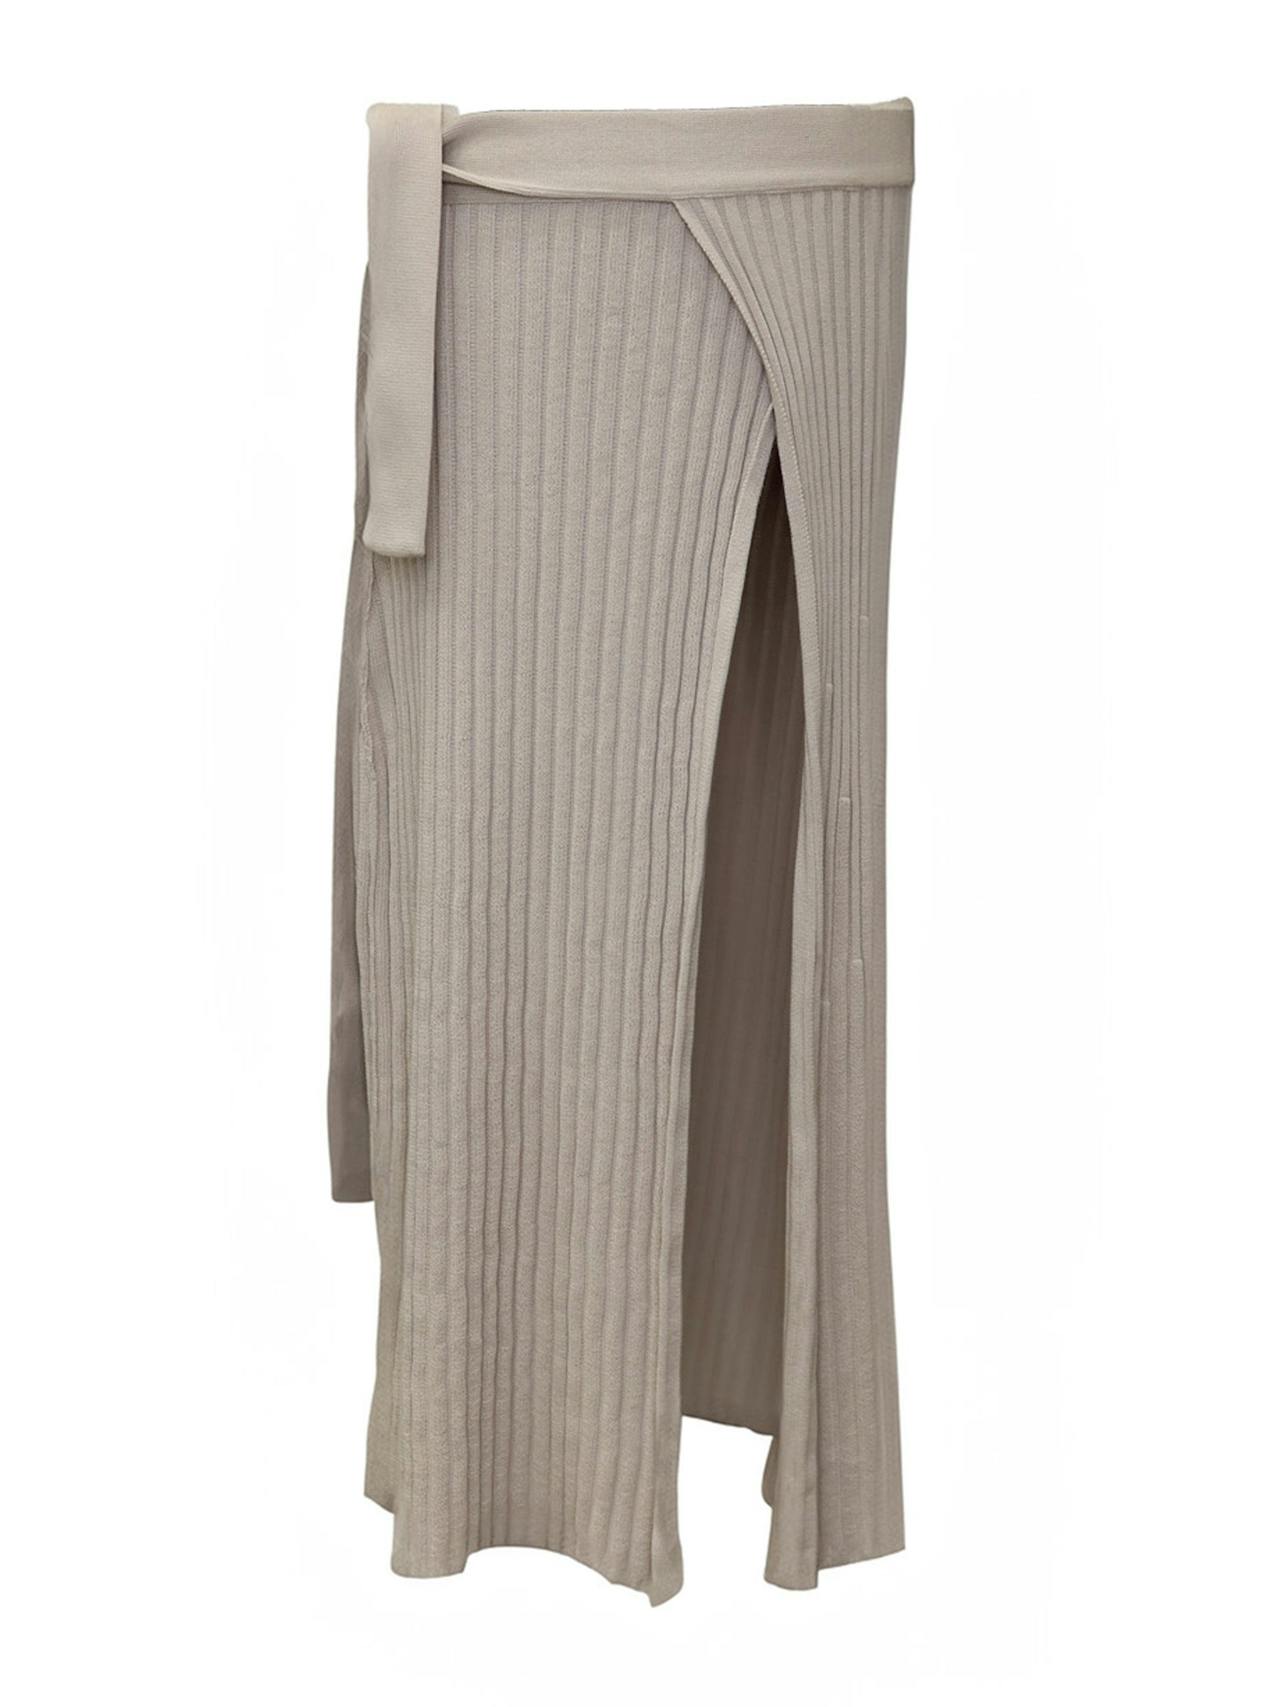 Šatrija silver grey cotton wrap skirt